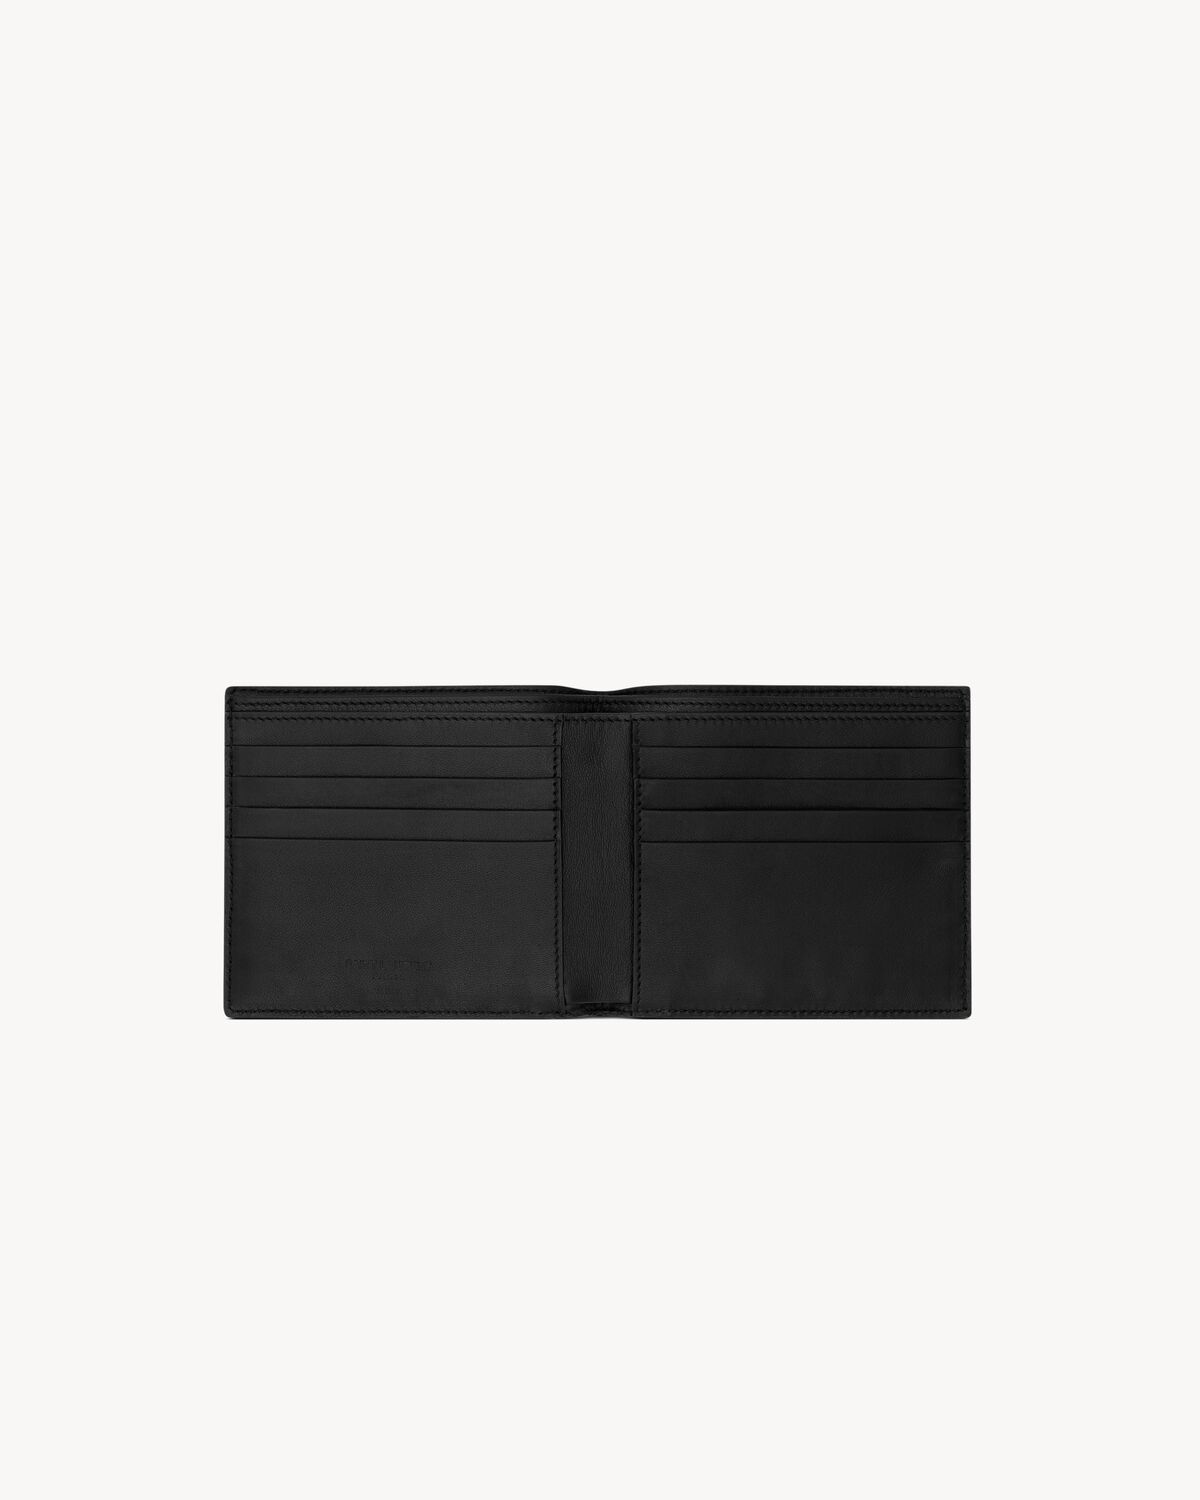 Saint Laurent Paris EAST/WEST wallet in smooth leather